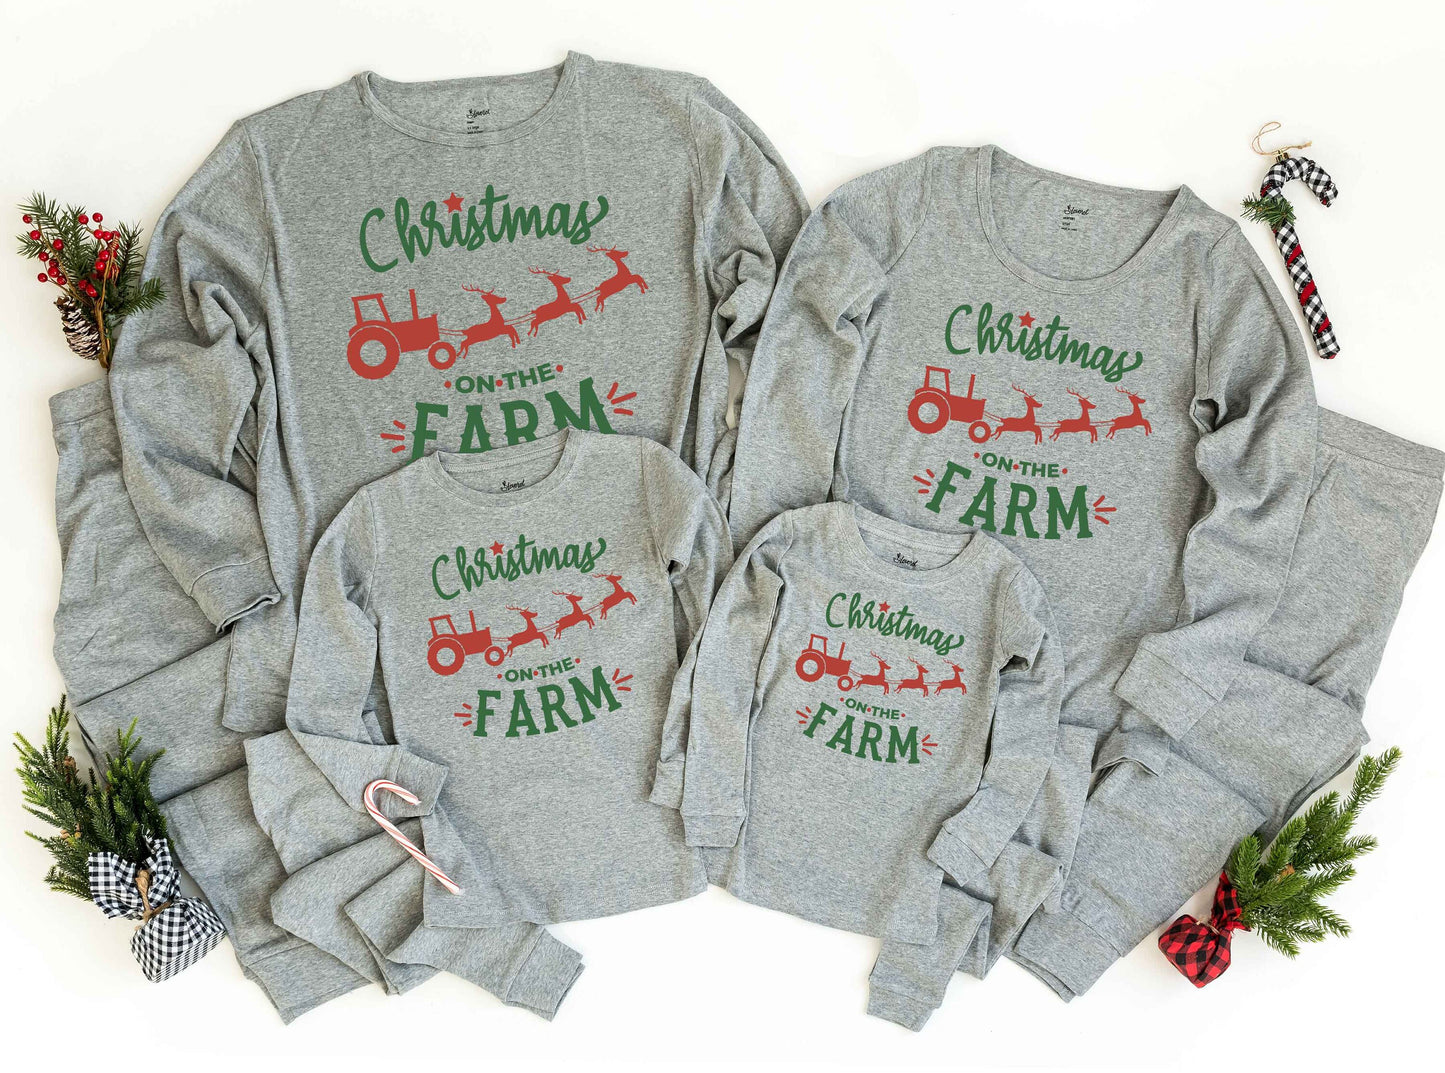 Christmas on the Farm Solid Grey Pajamas - adult and kids sizes - kids christmas pjs - women's christmas jammies - Family matching PJs